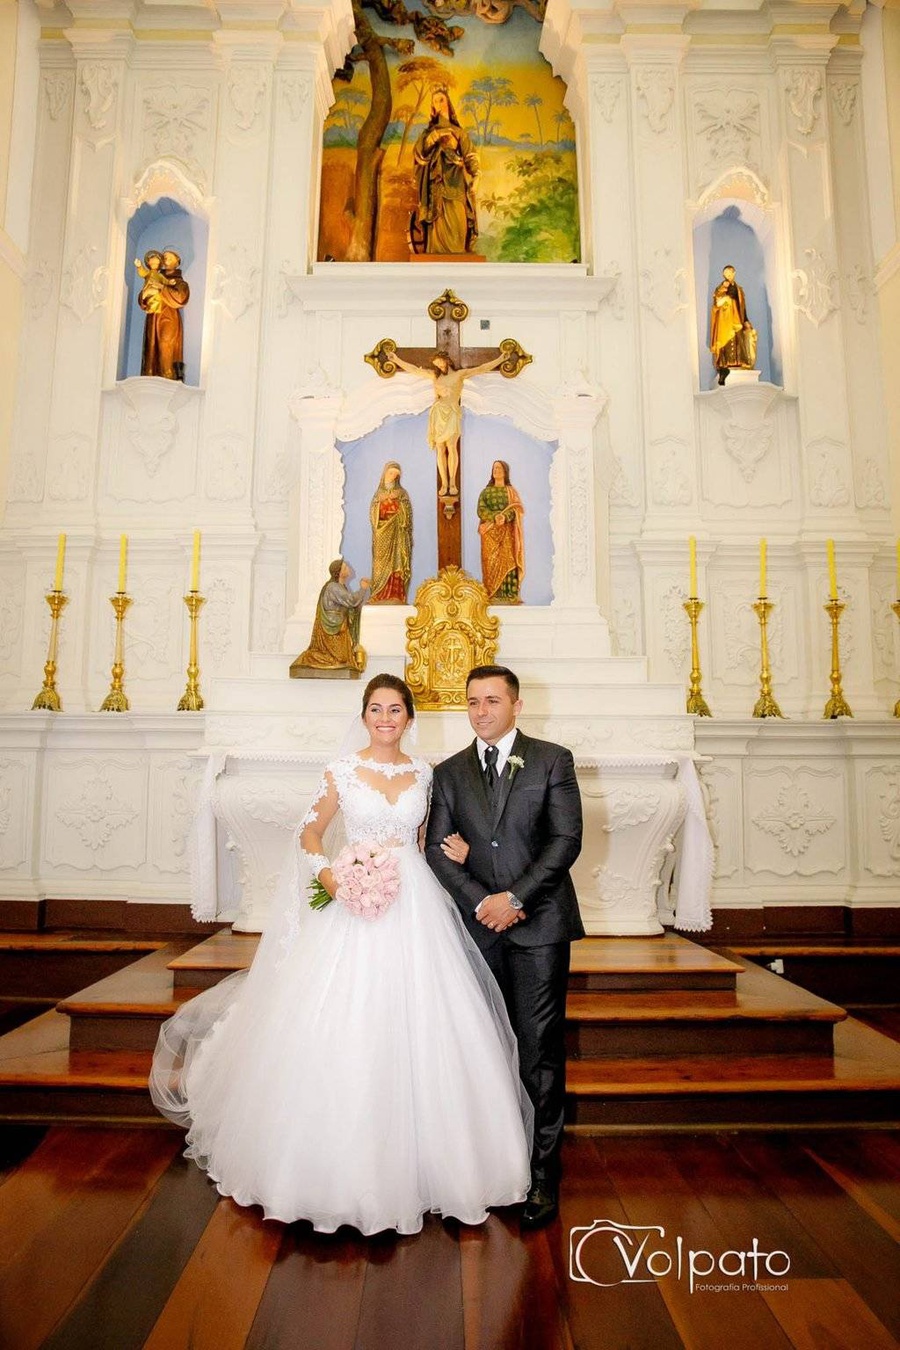 Casamento | Nathália & Raul 